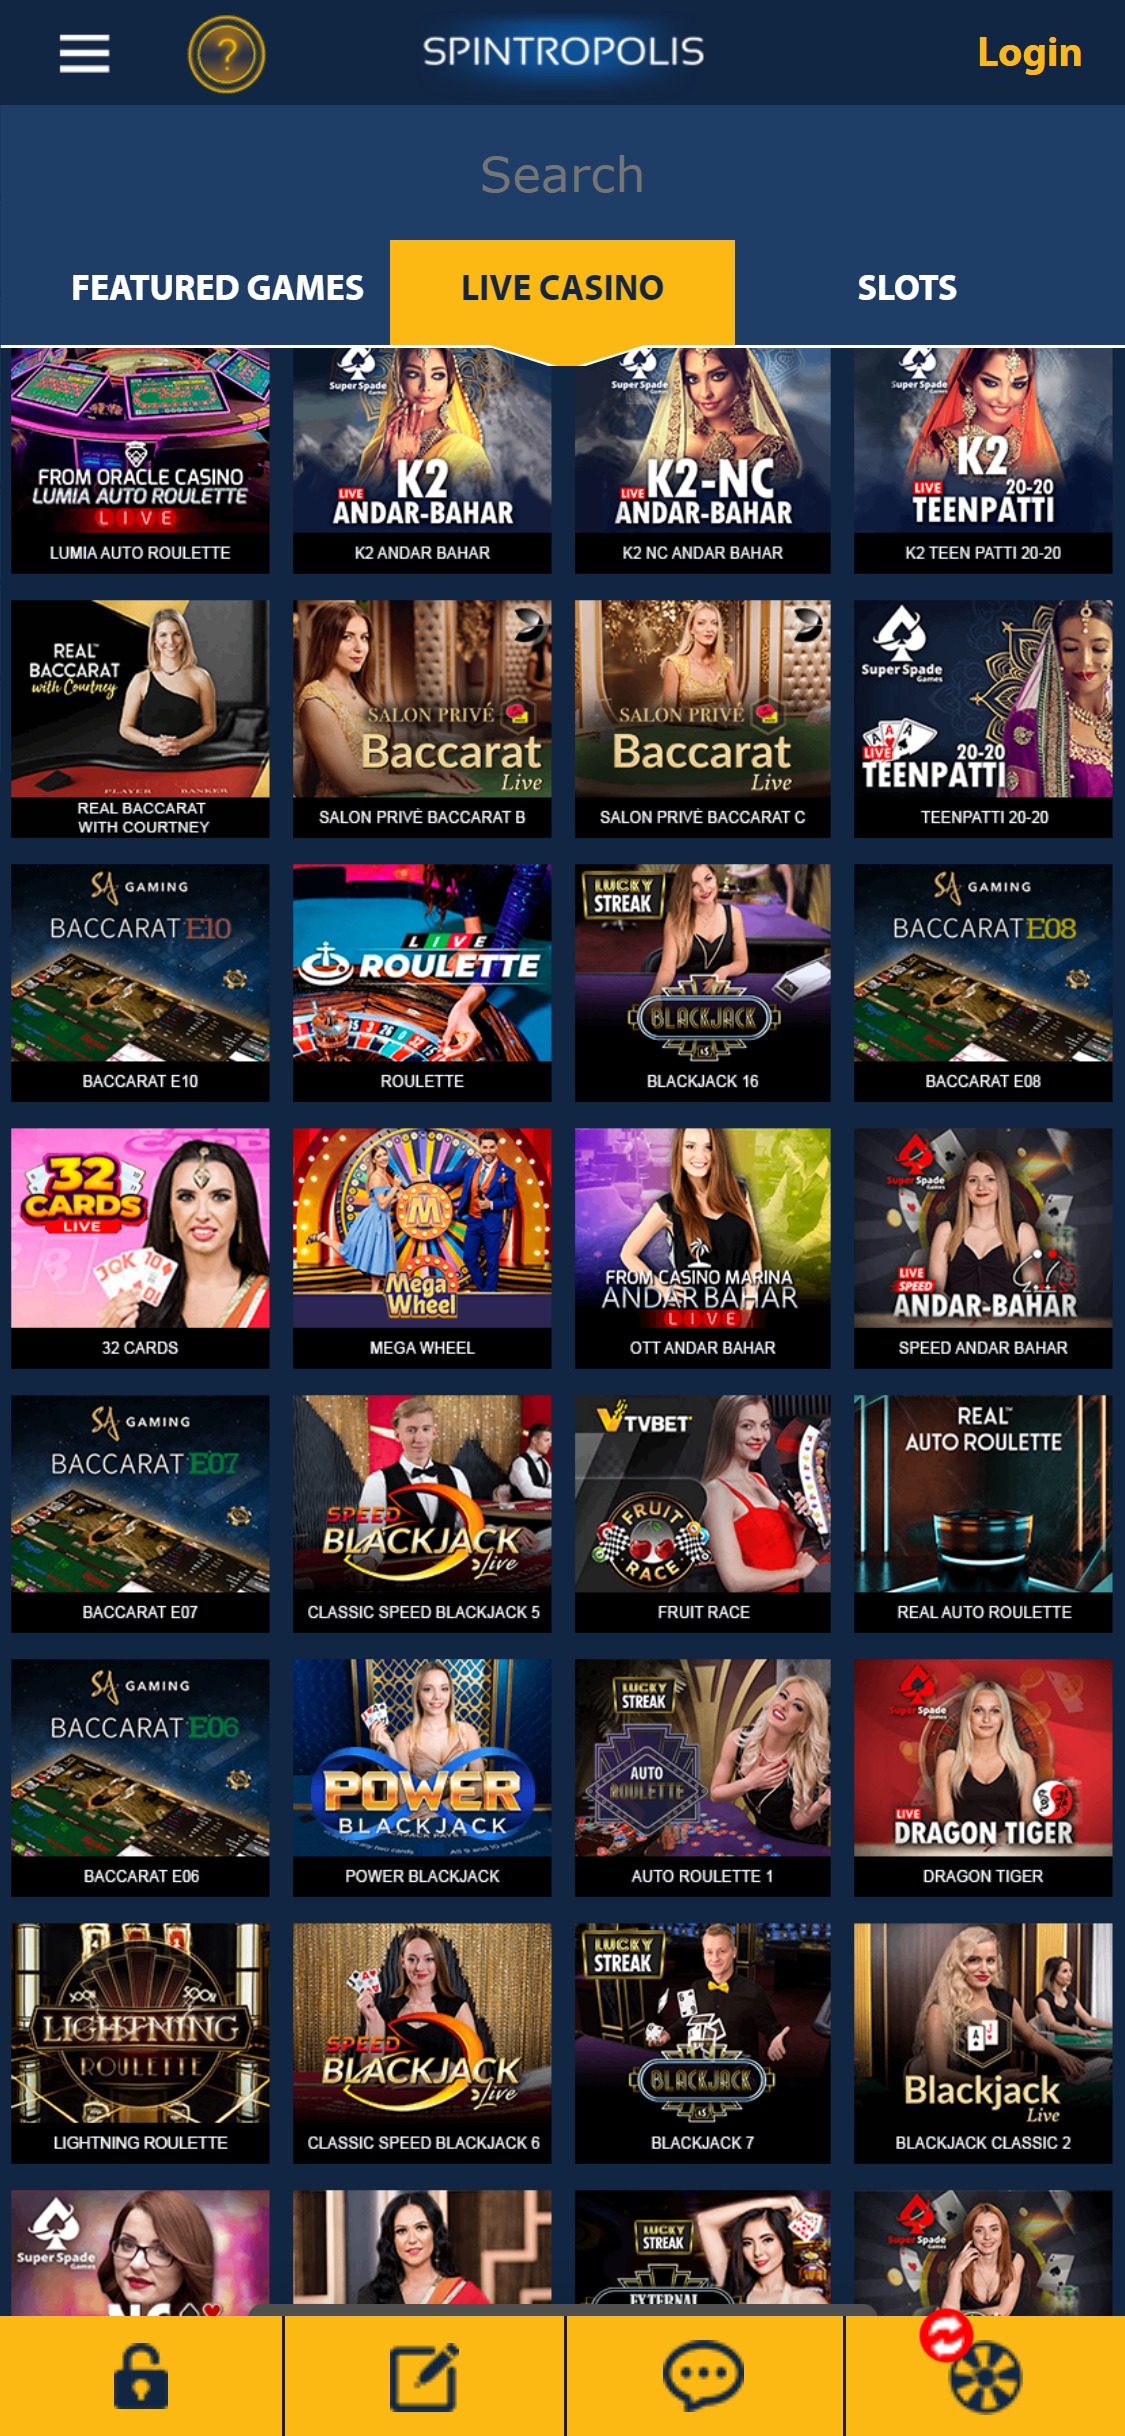 Spintropolis Casino Mobile Live Dealer Games Review